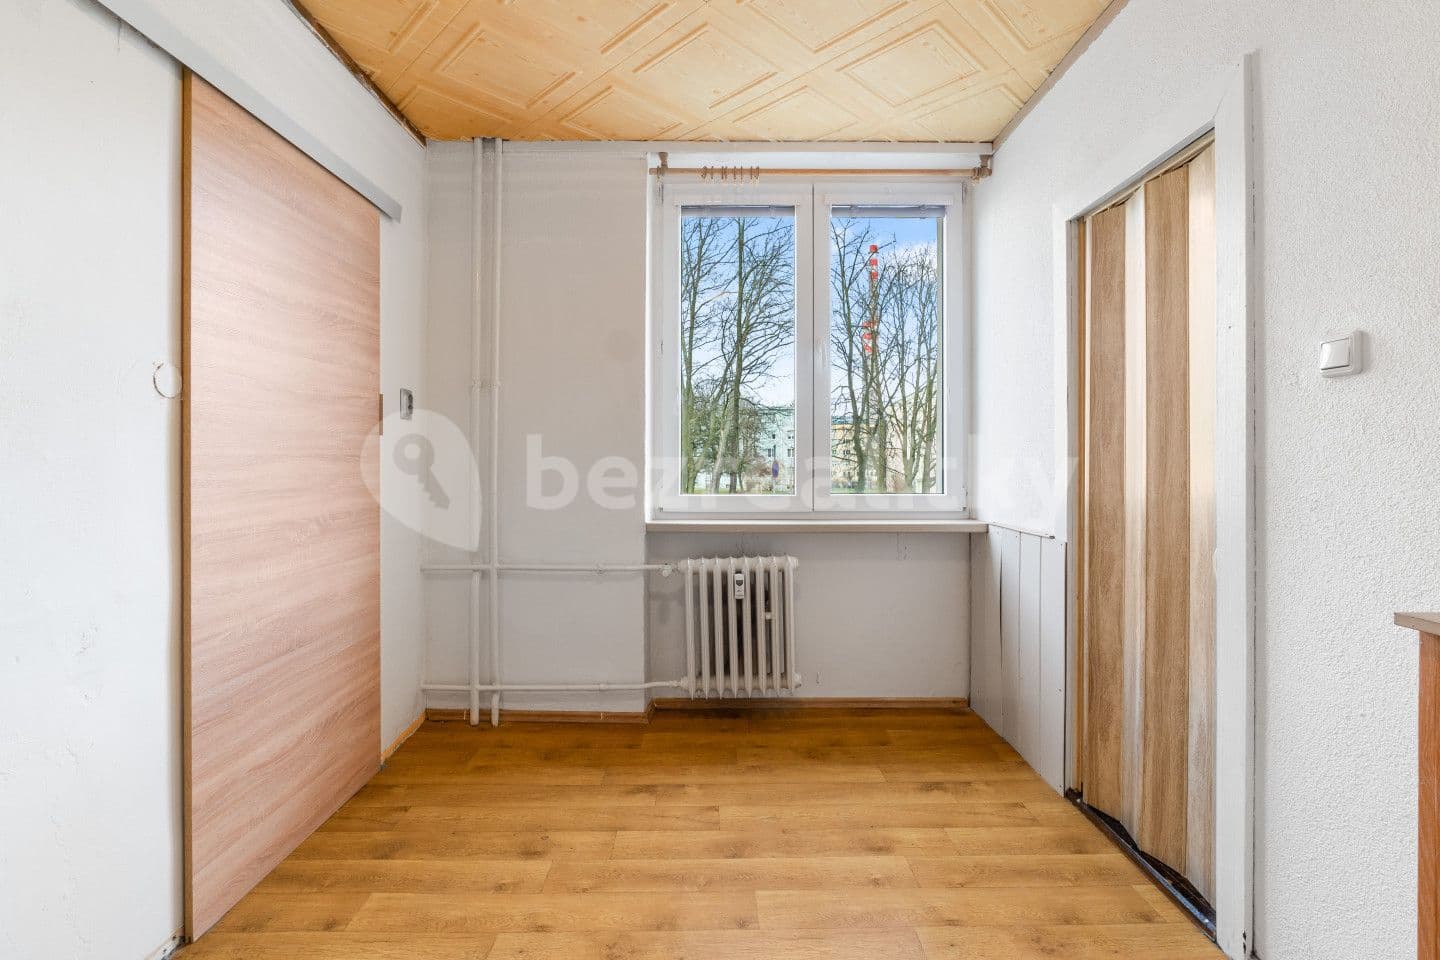 2 bedroom flat for sale, 50 m², Zrenjaninská, Teplice, Ústecký Region